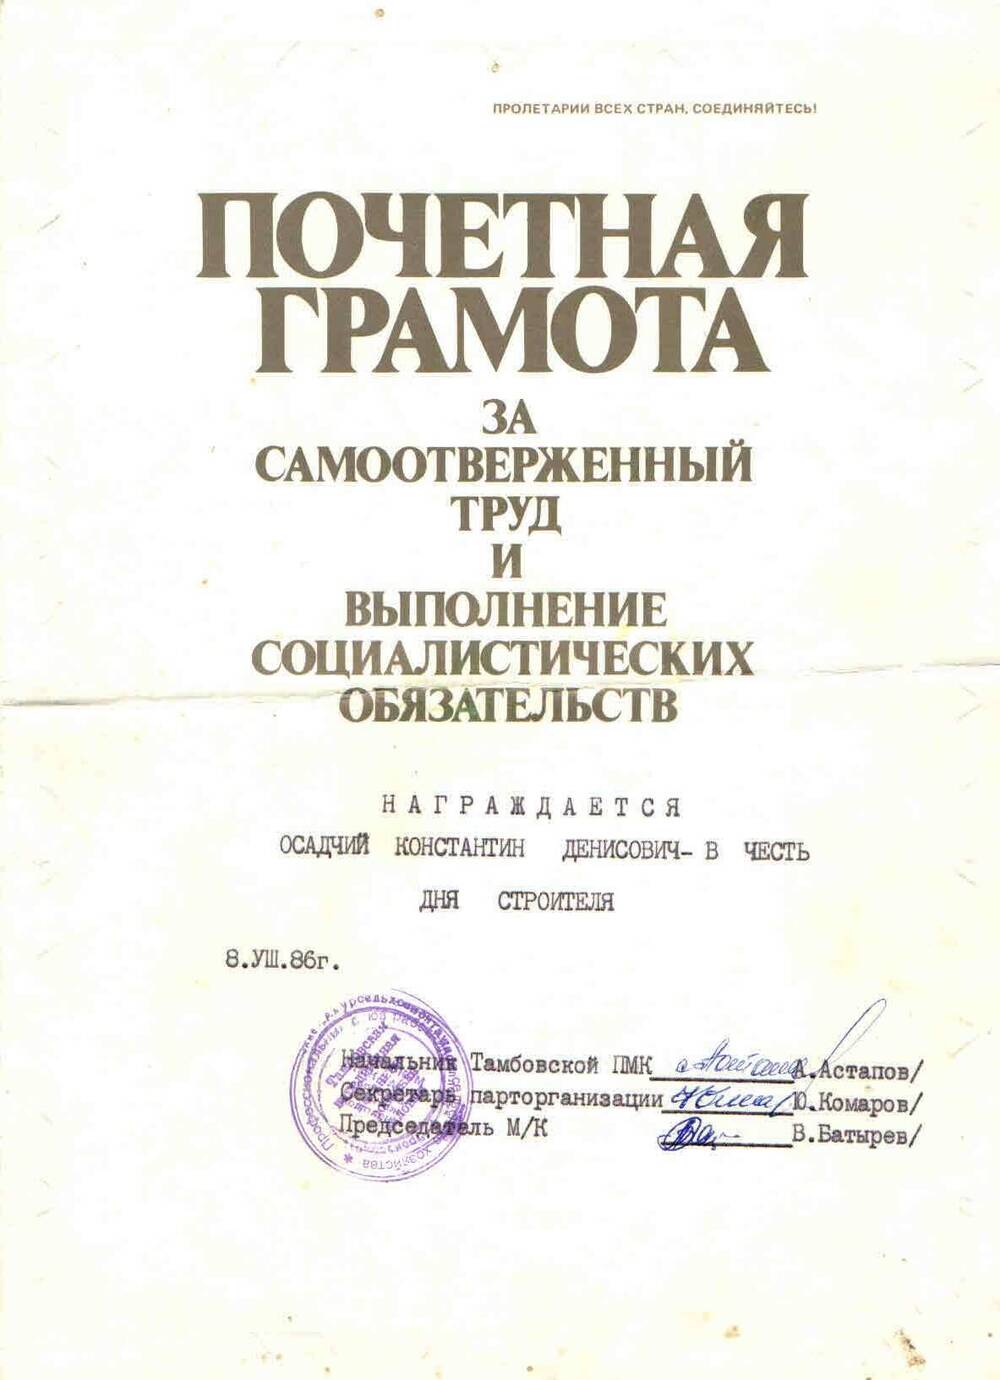 Грамота почетная от администрации ПМК Осадчего Константина Денисовича в честь Дня строителя.